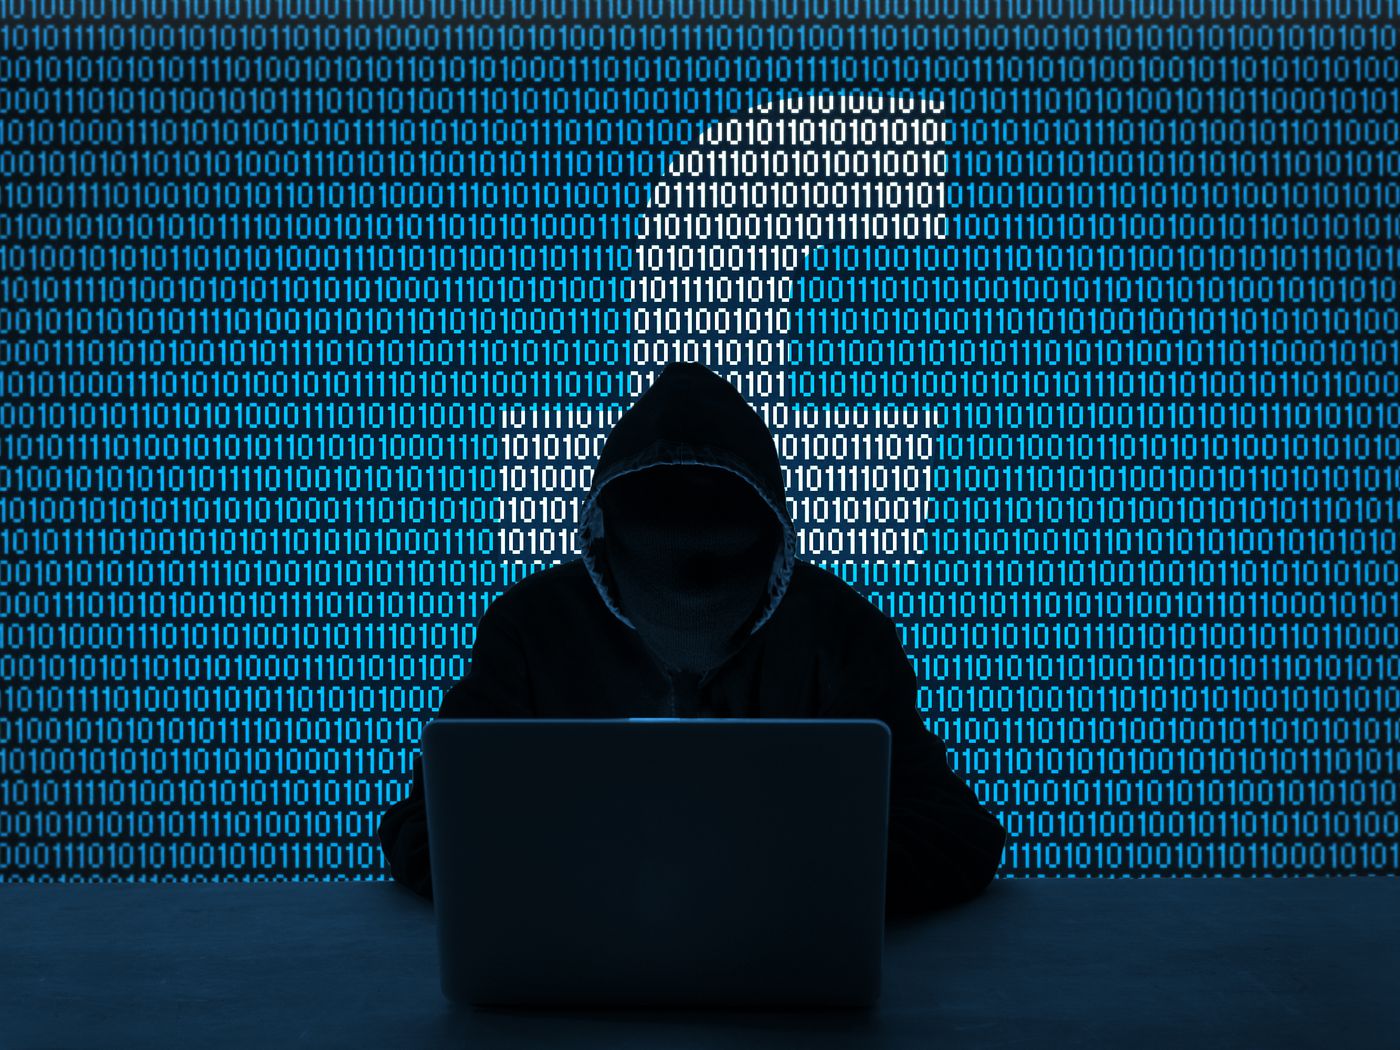 50 crore Facebook accounts leaked Hackers' websites